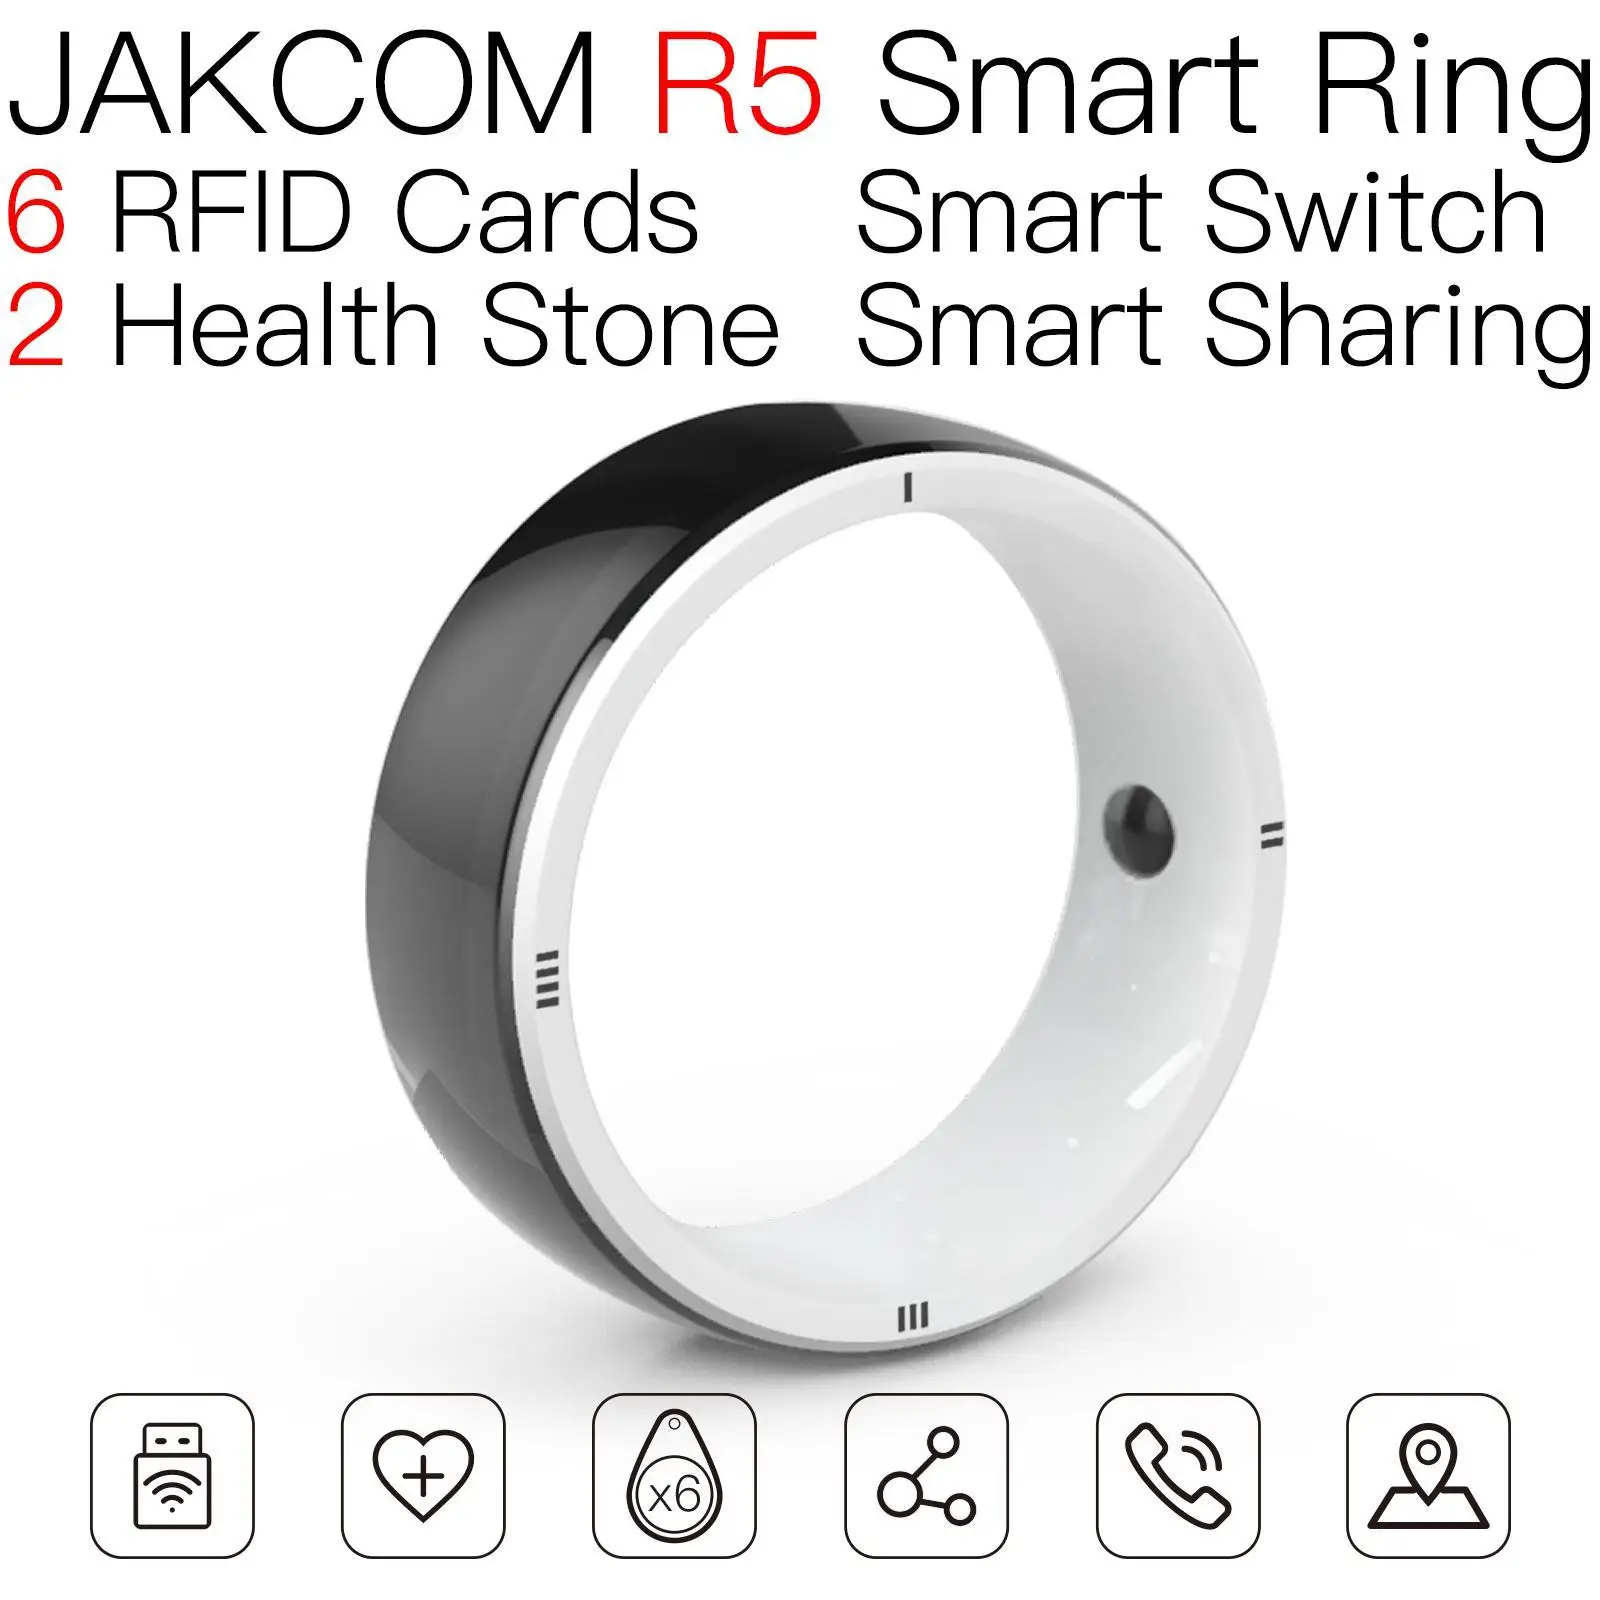 

JAKCOM R5 Smart Ring New arrival as ev2 printed 6pin ftdi ft232rl ft232 usb to ttl uart serial id67 chips original